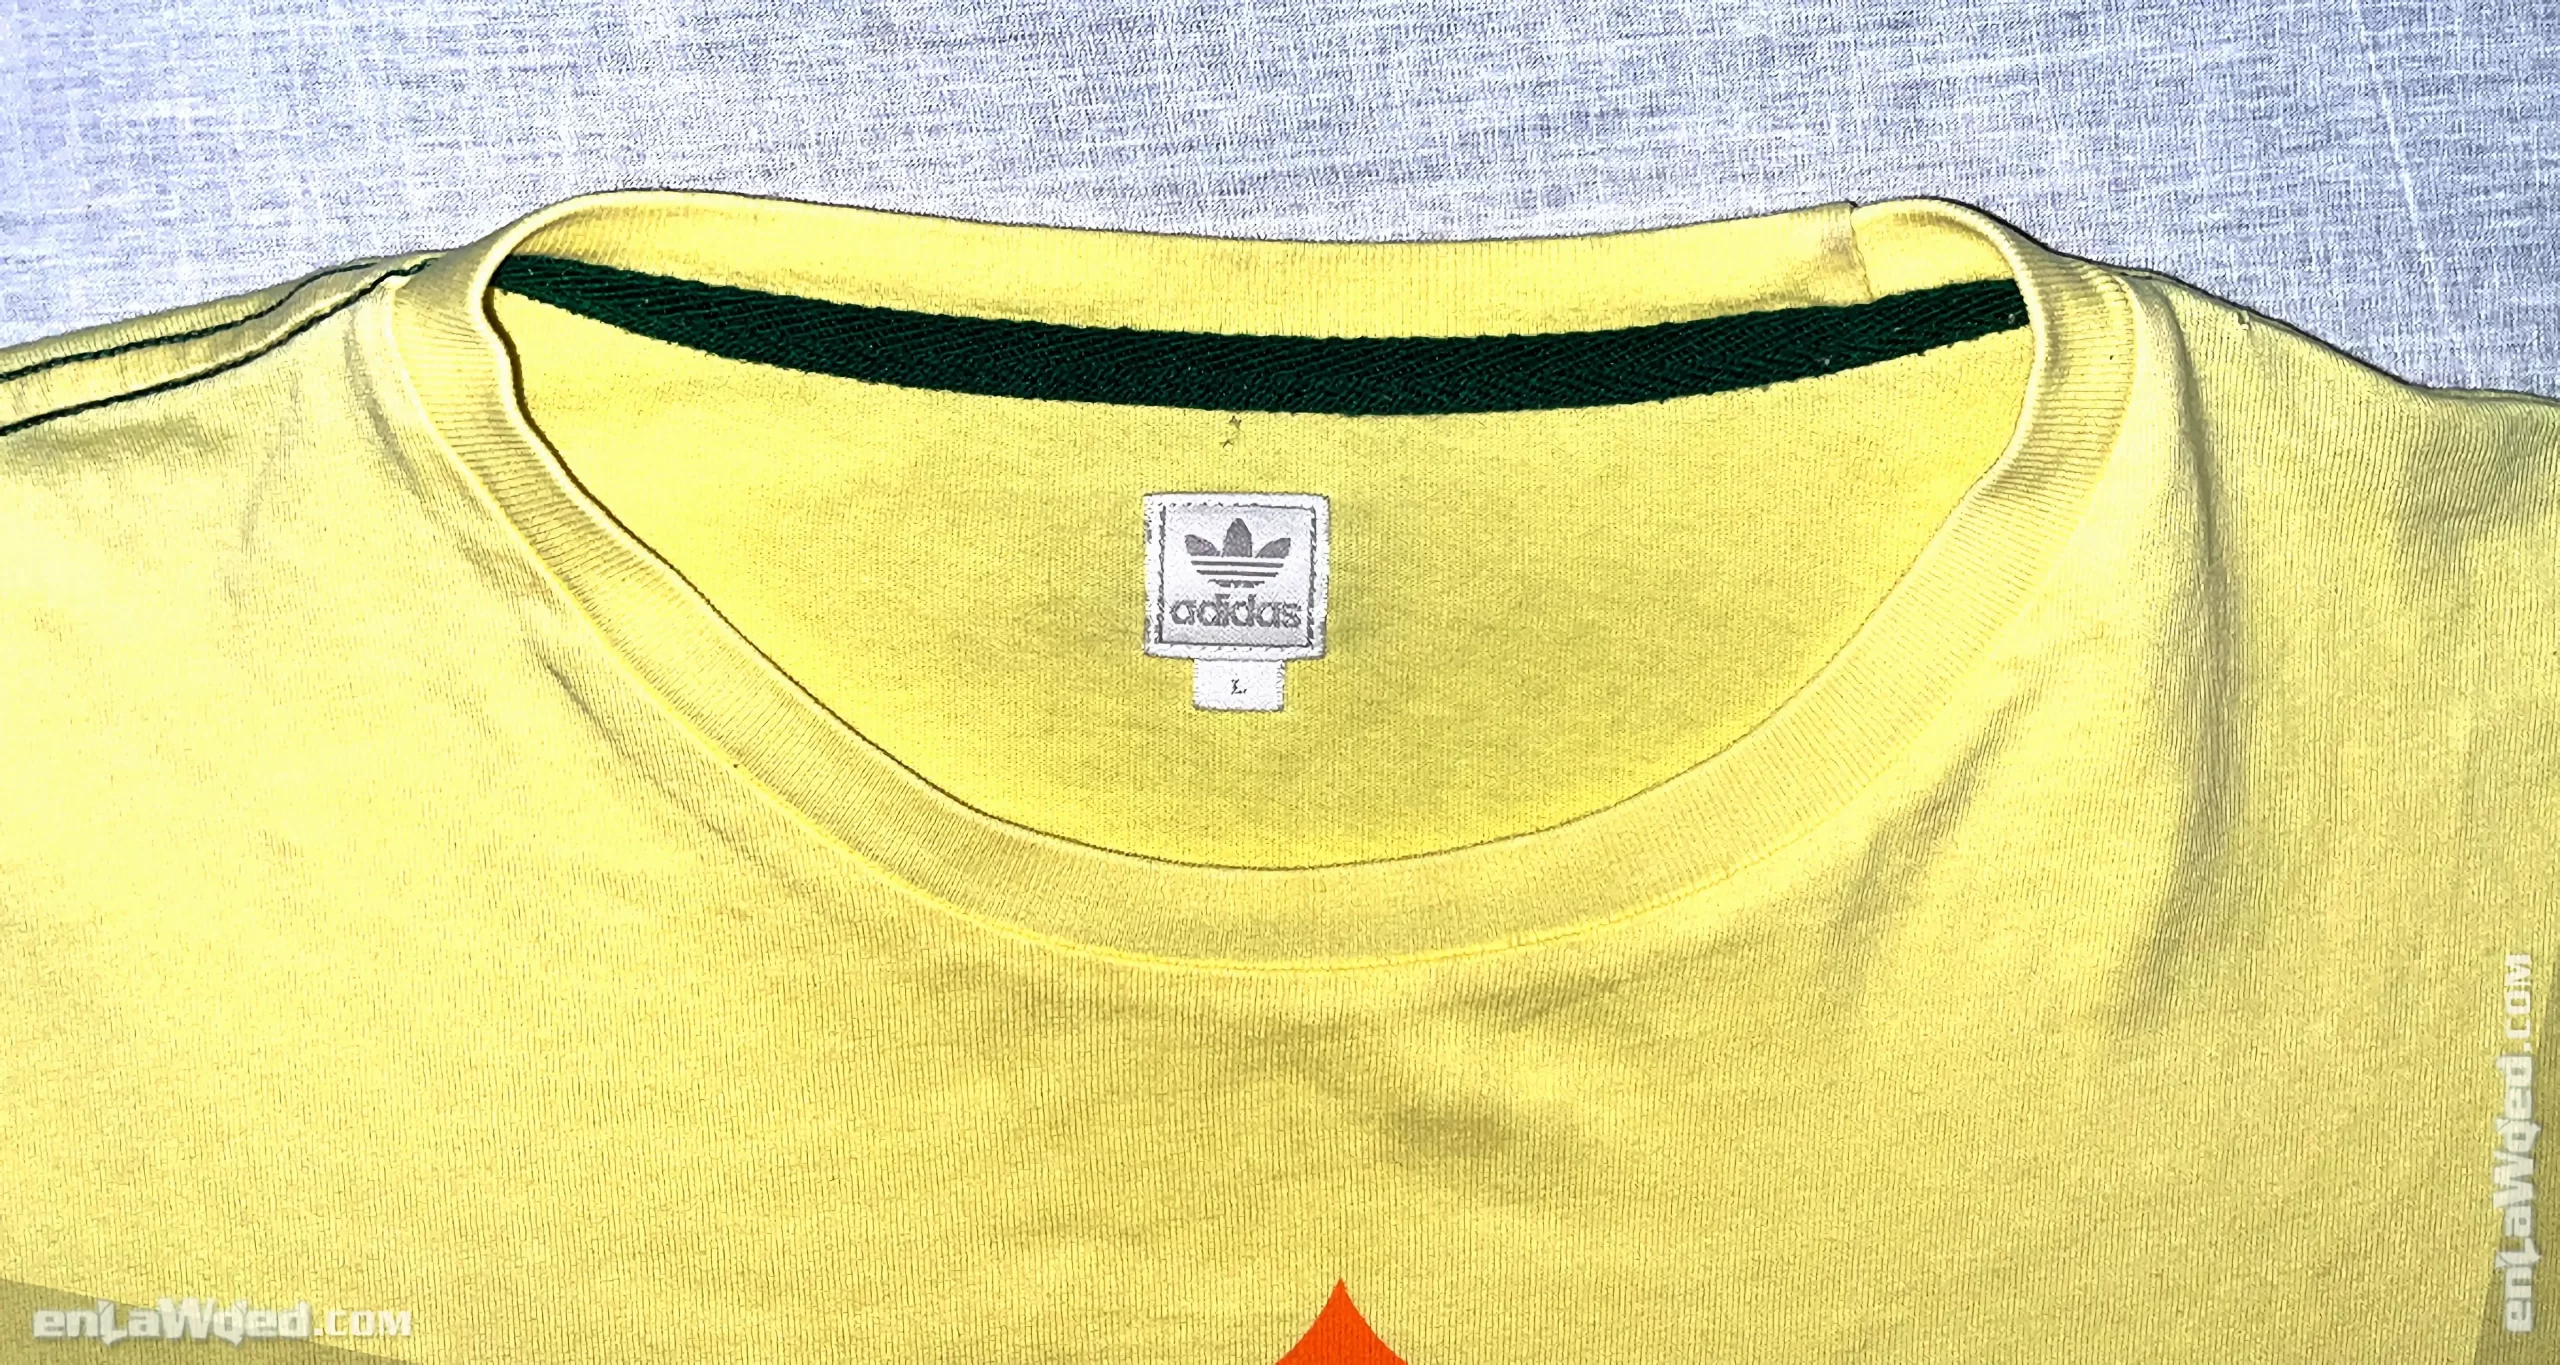 Men’s 2007 Marrakech T-Shirt by Adidas Originals: Light (EnLawded.com file #lmc5nf0vt180feipw0s)